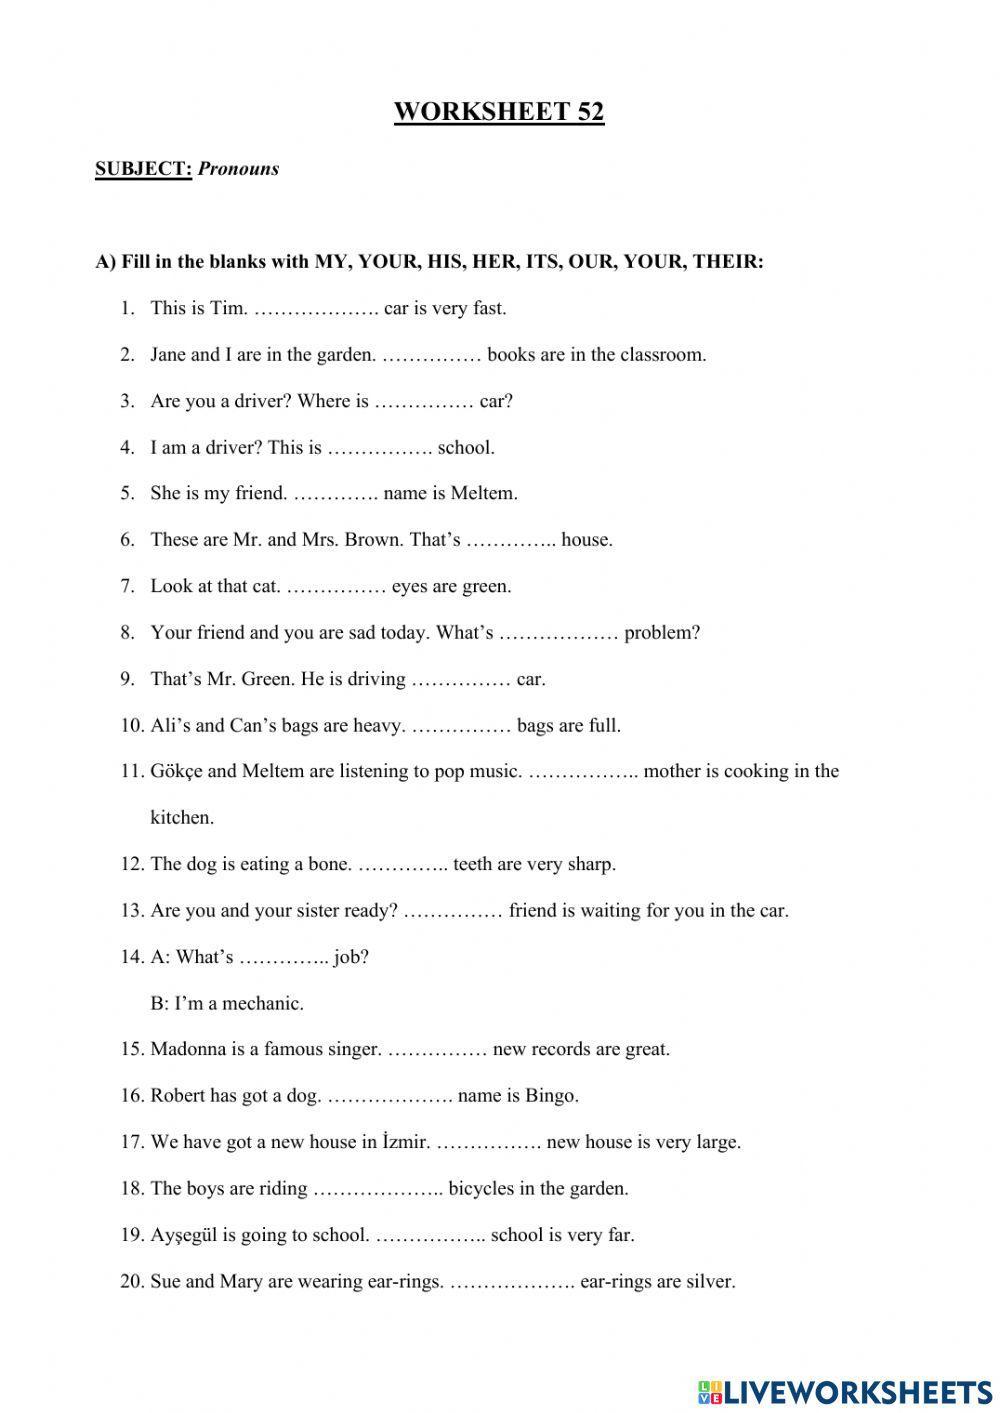 Worksheet 52 - Pronouns